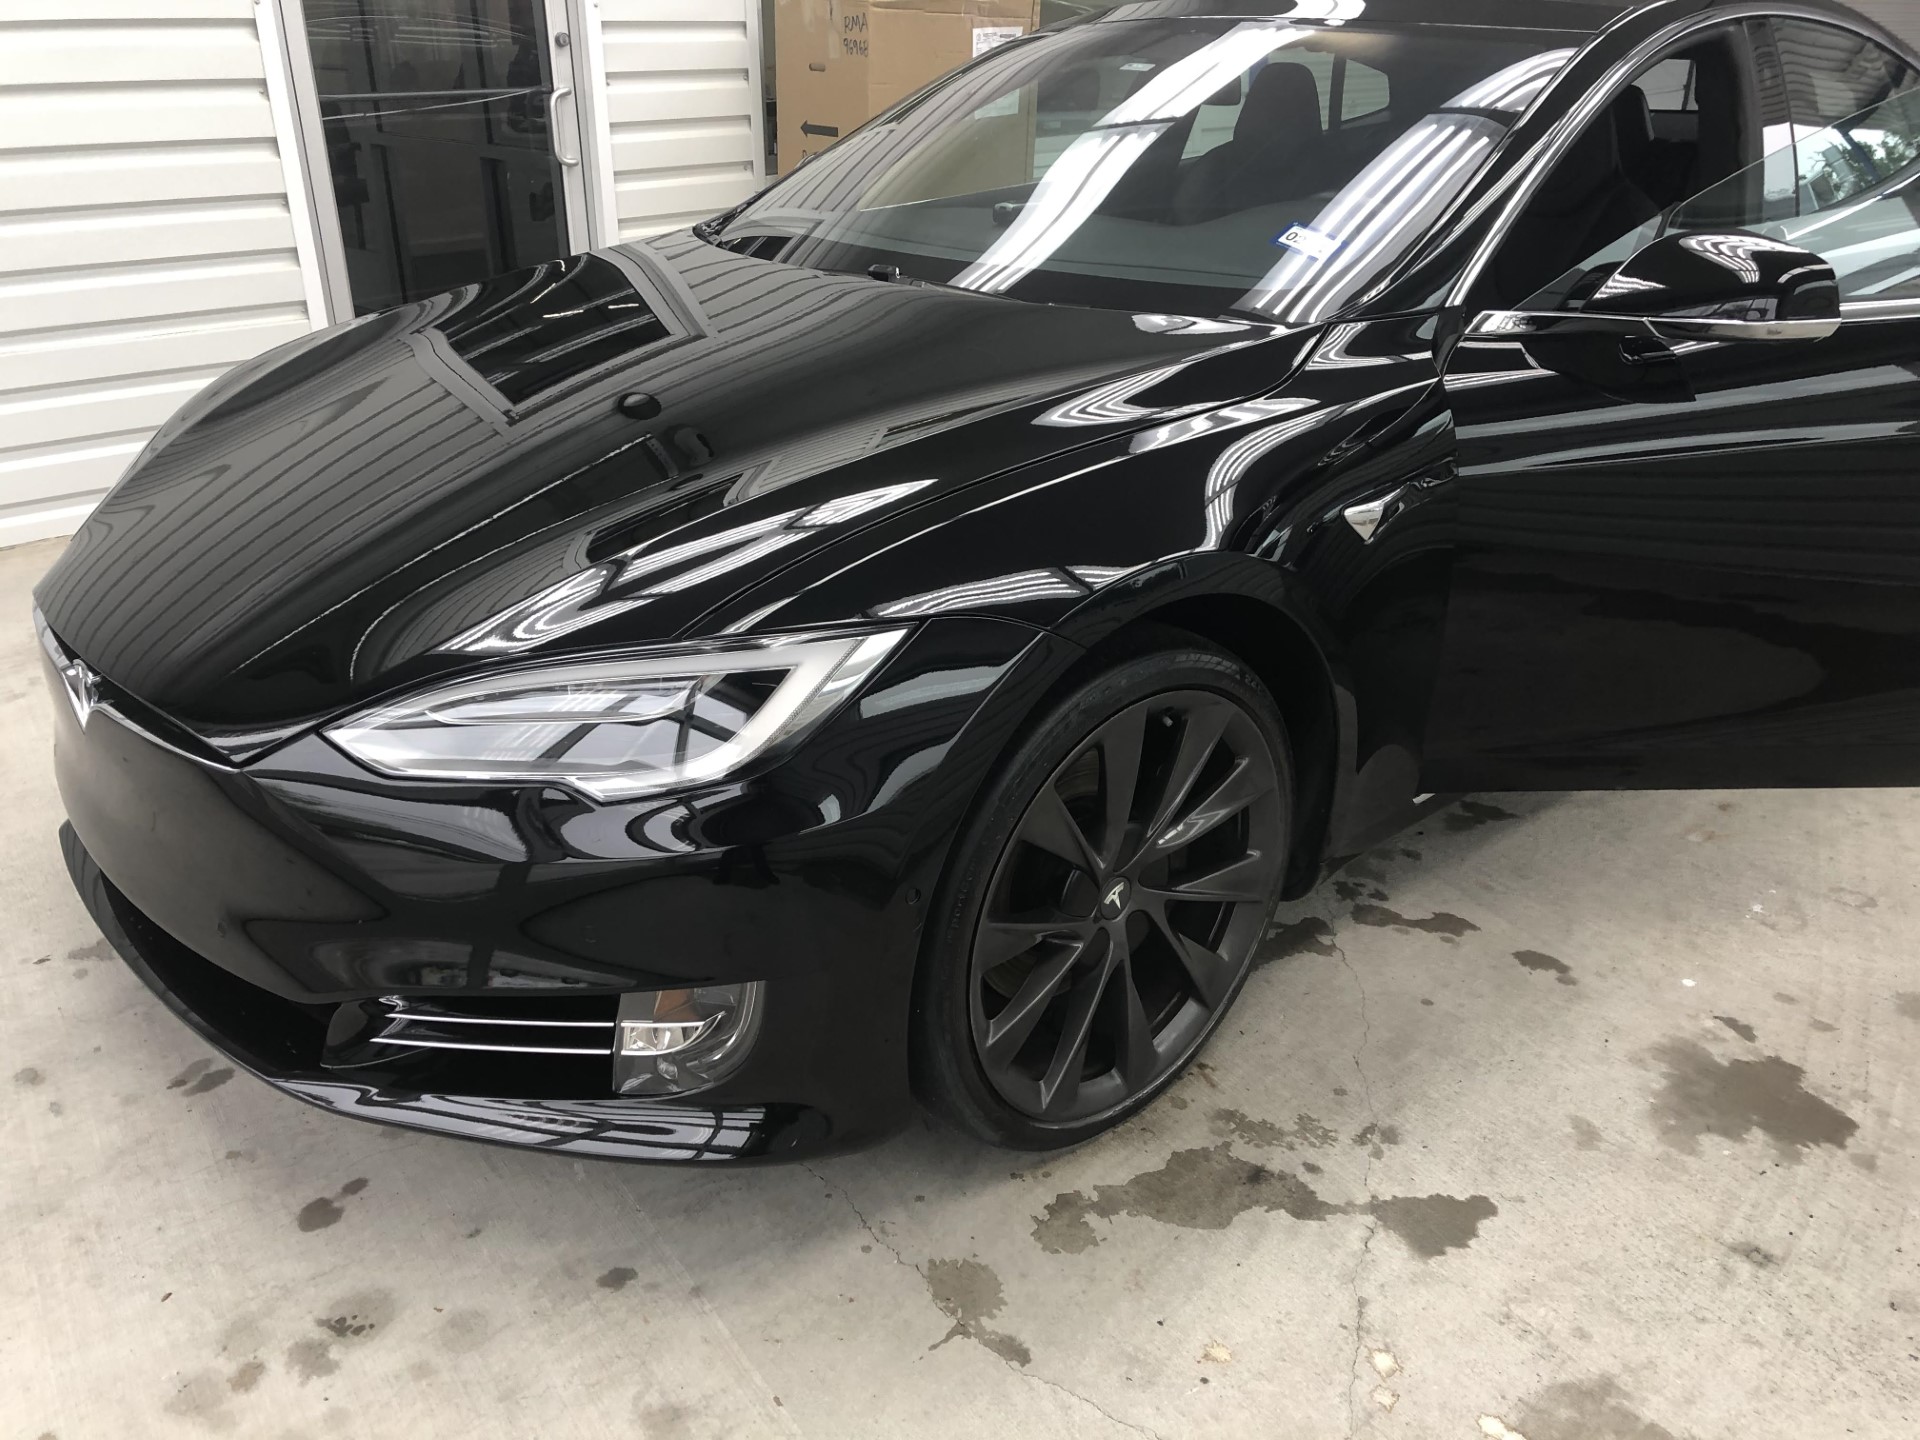 a black car in a garage  